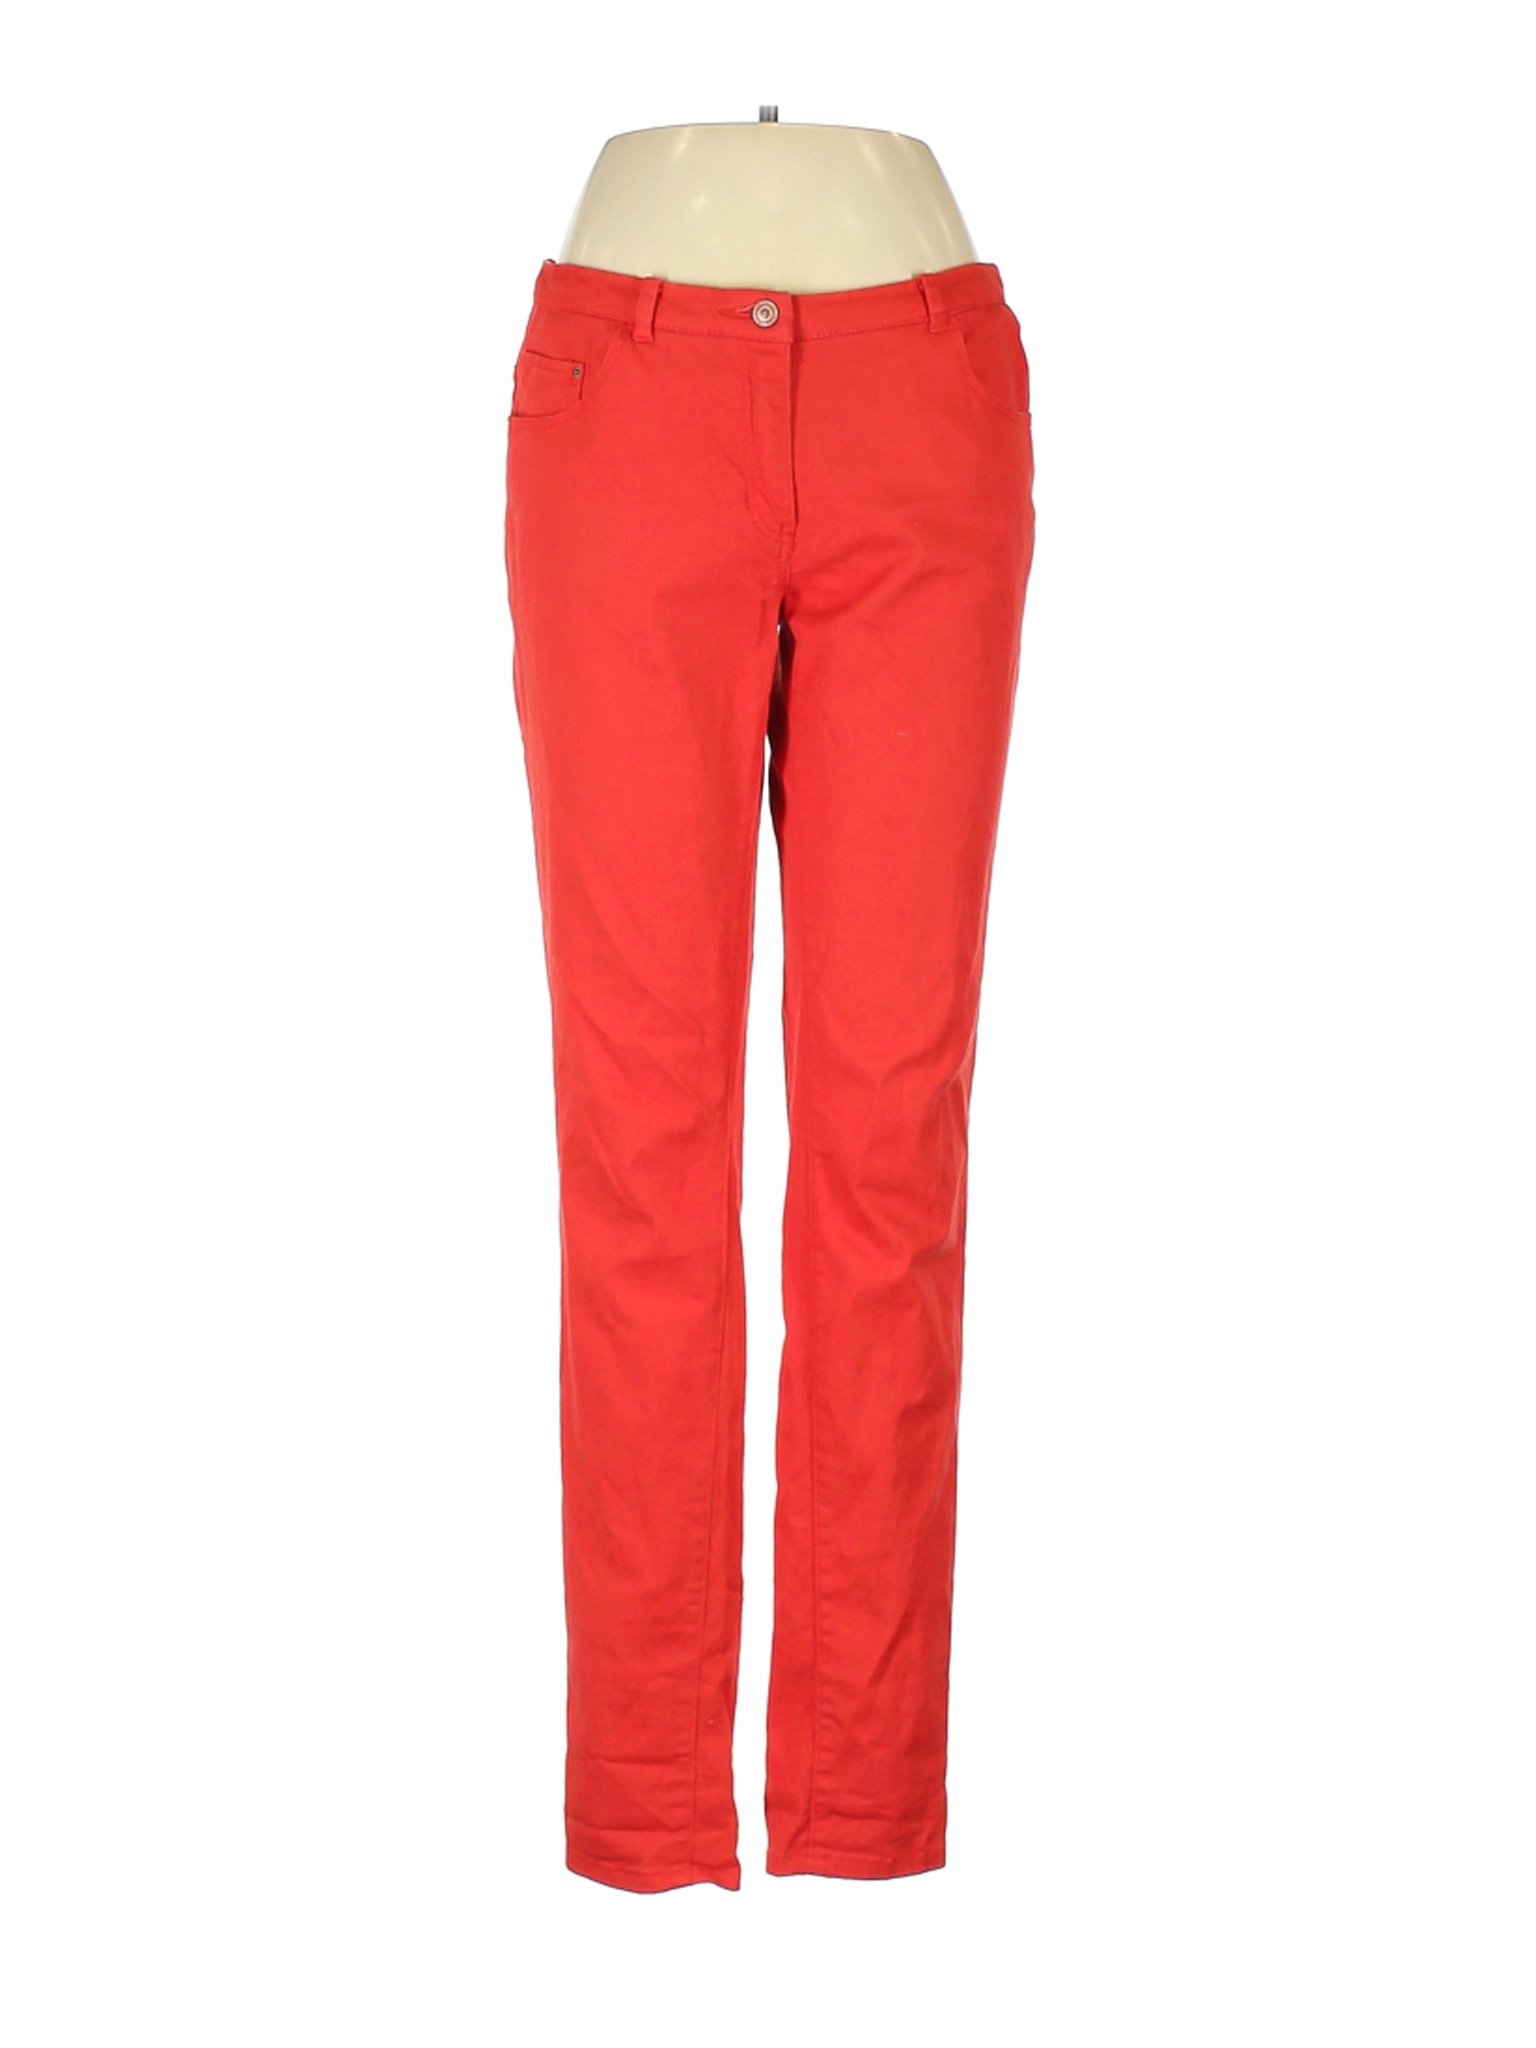 H&M Women Orange Jeans 8 | eBay